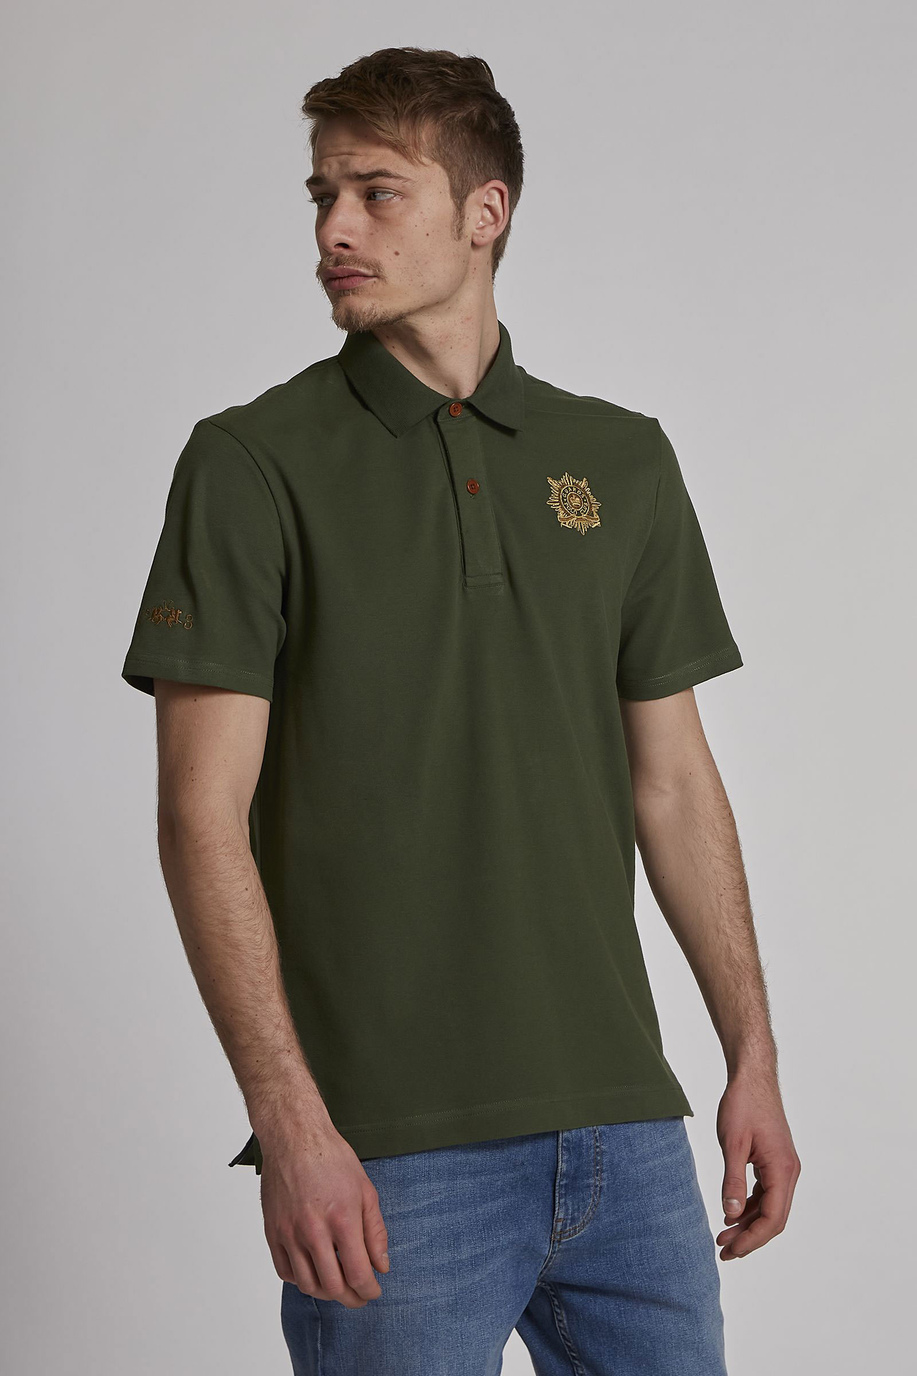 Herren-Poloshirt aus Stretch-Baumwolle mit kurzen Ärmeln im Regular Fit - England | La Martina - Official Online Shop